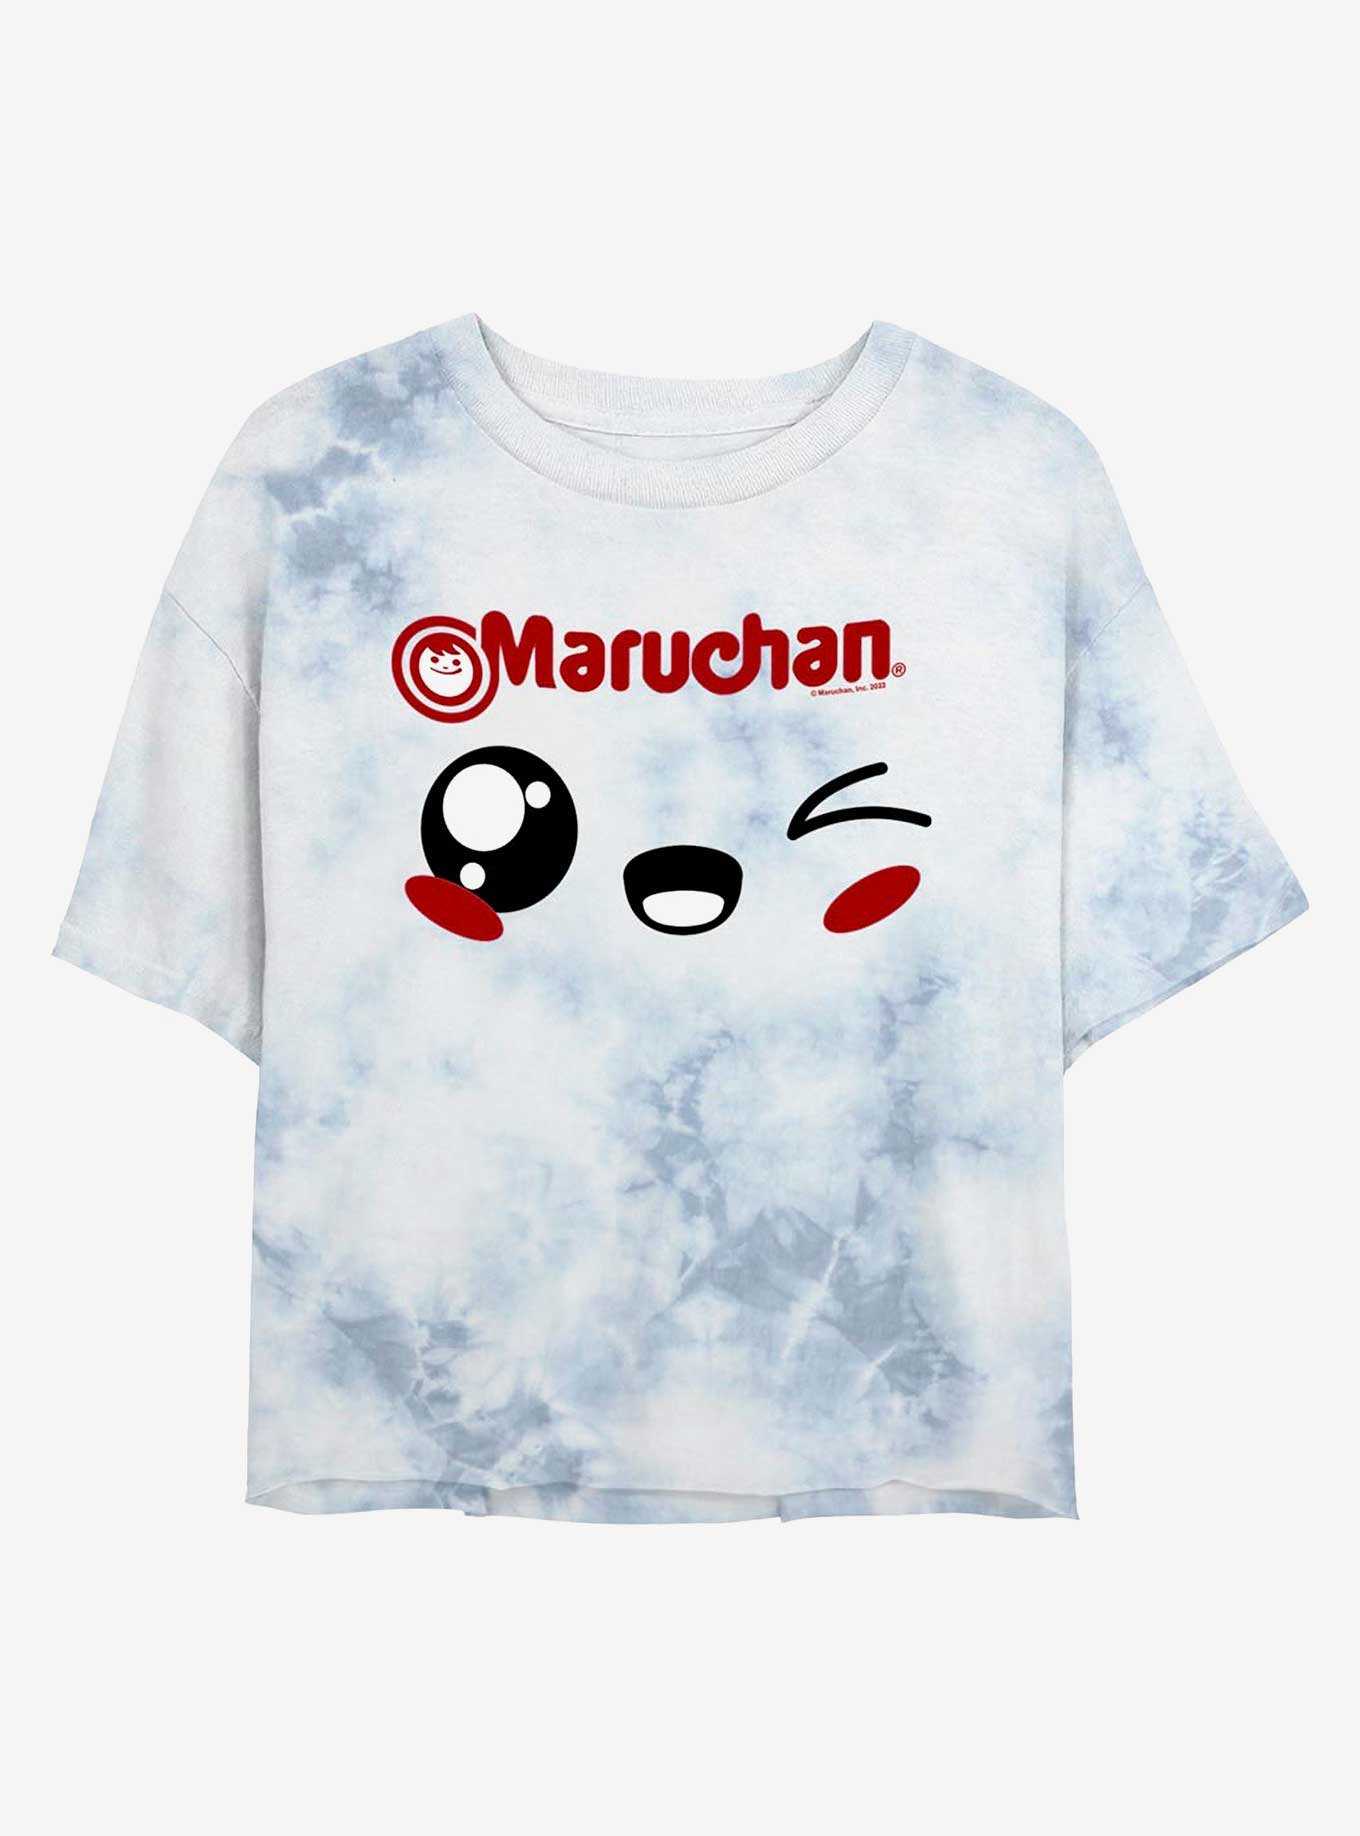 Maruchan Kawaii Wink Face Tie-Dye Girls Crop T-Shirt, , hi-res